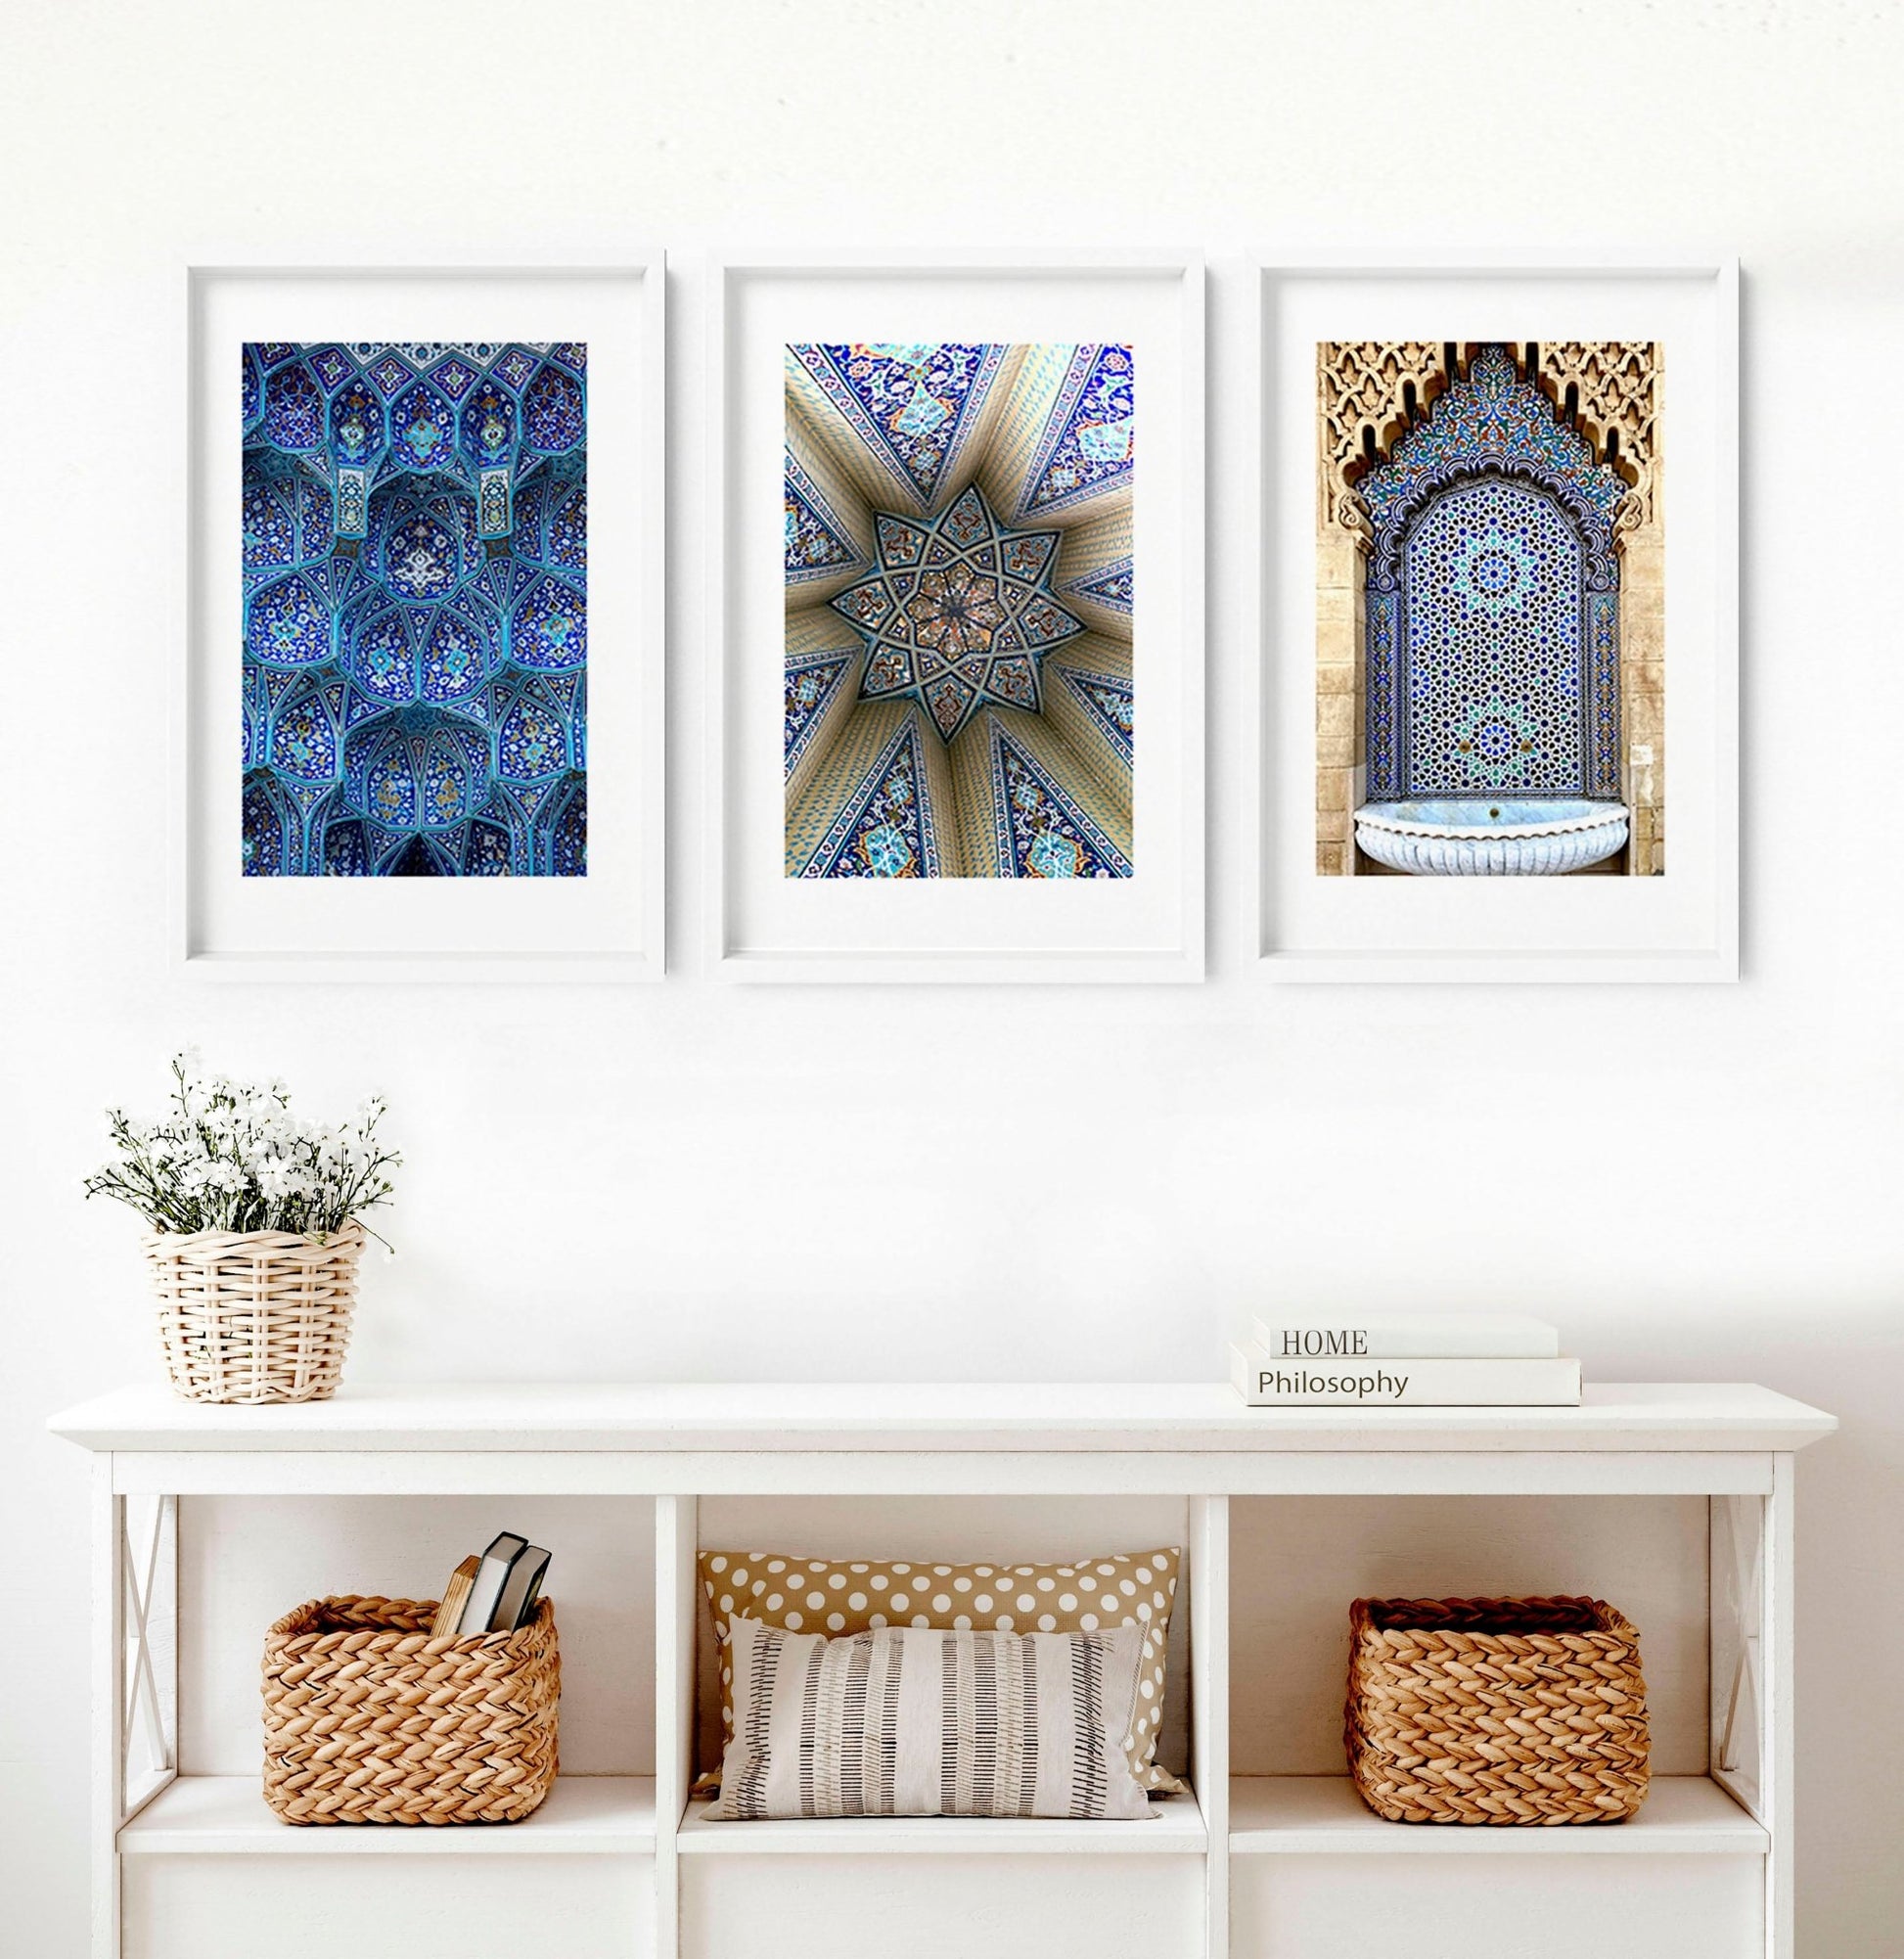 Ramadan decoration ideas | Set of 3 wall art prints - About Wall Art